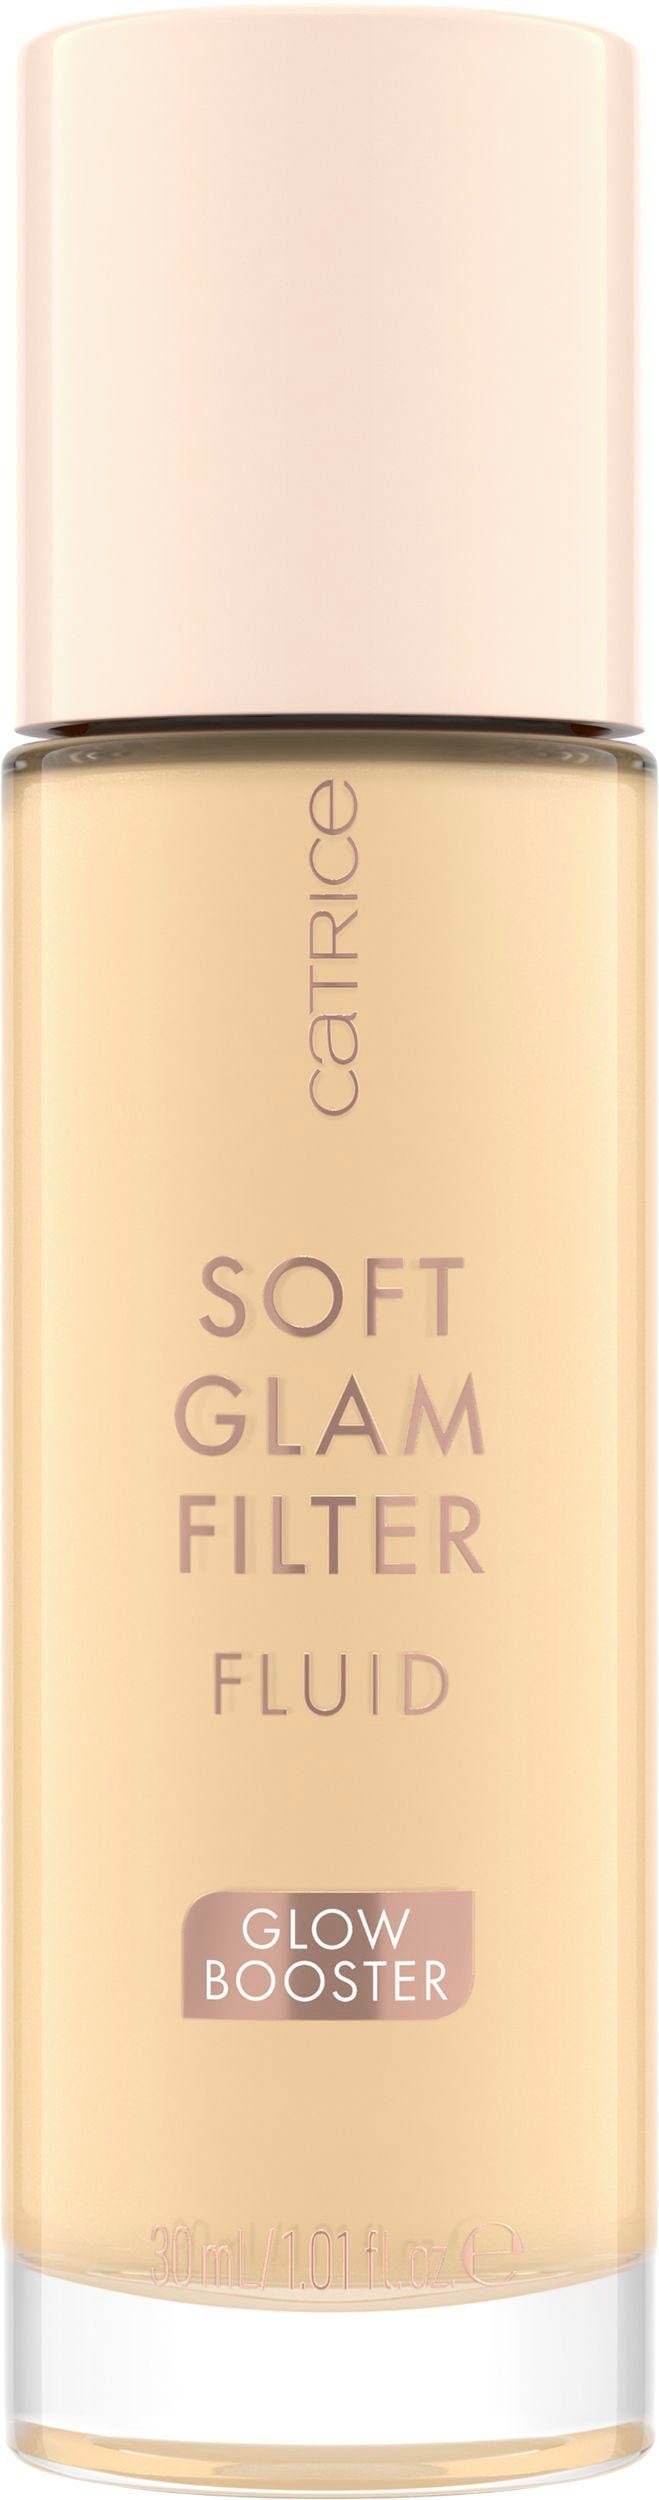 Soft Glam Filter Fluid Catrice Primer